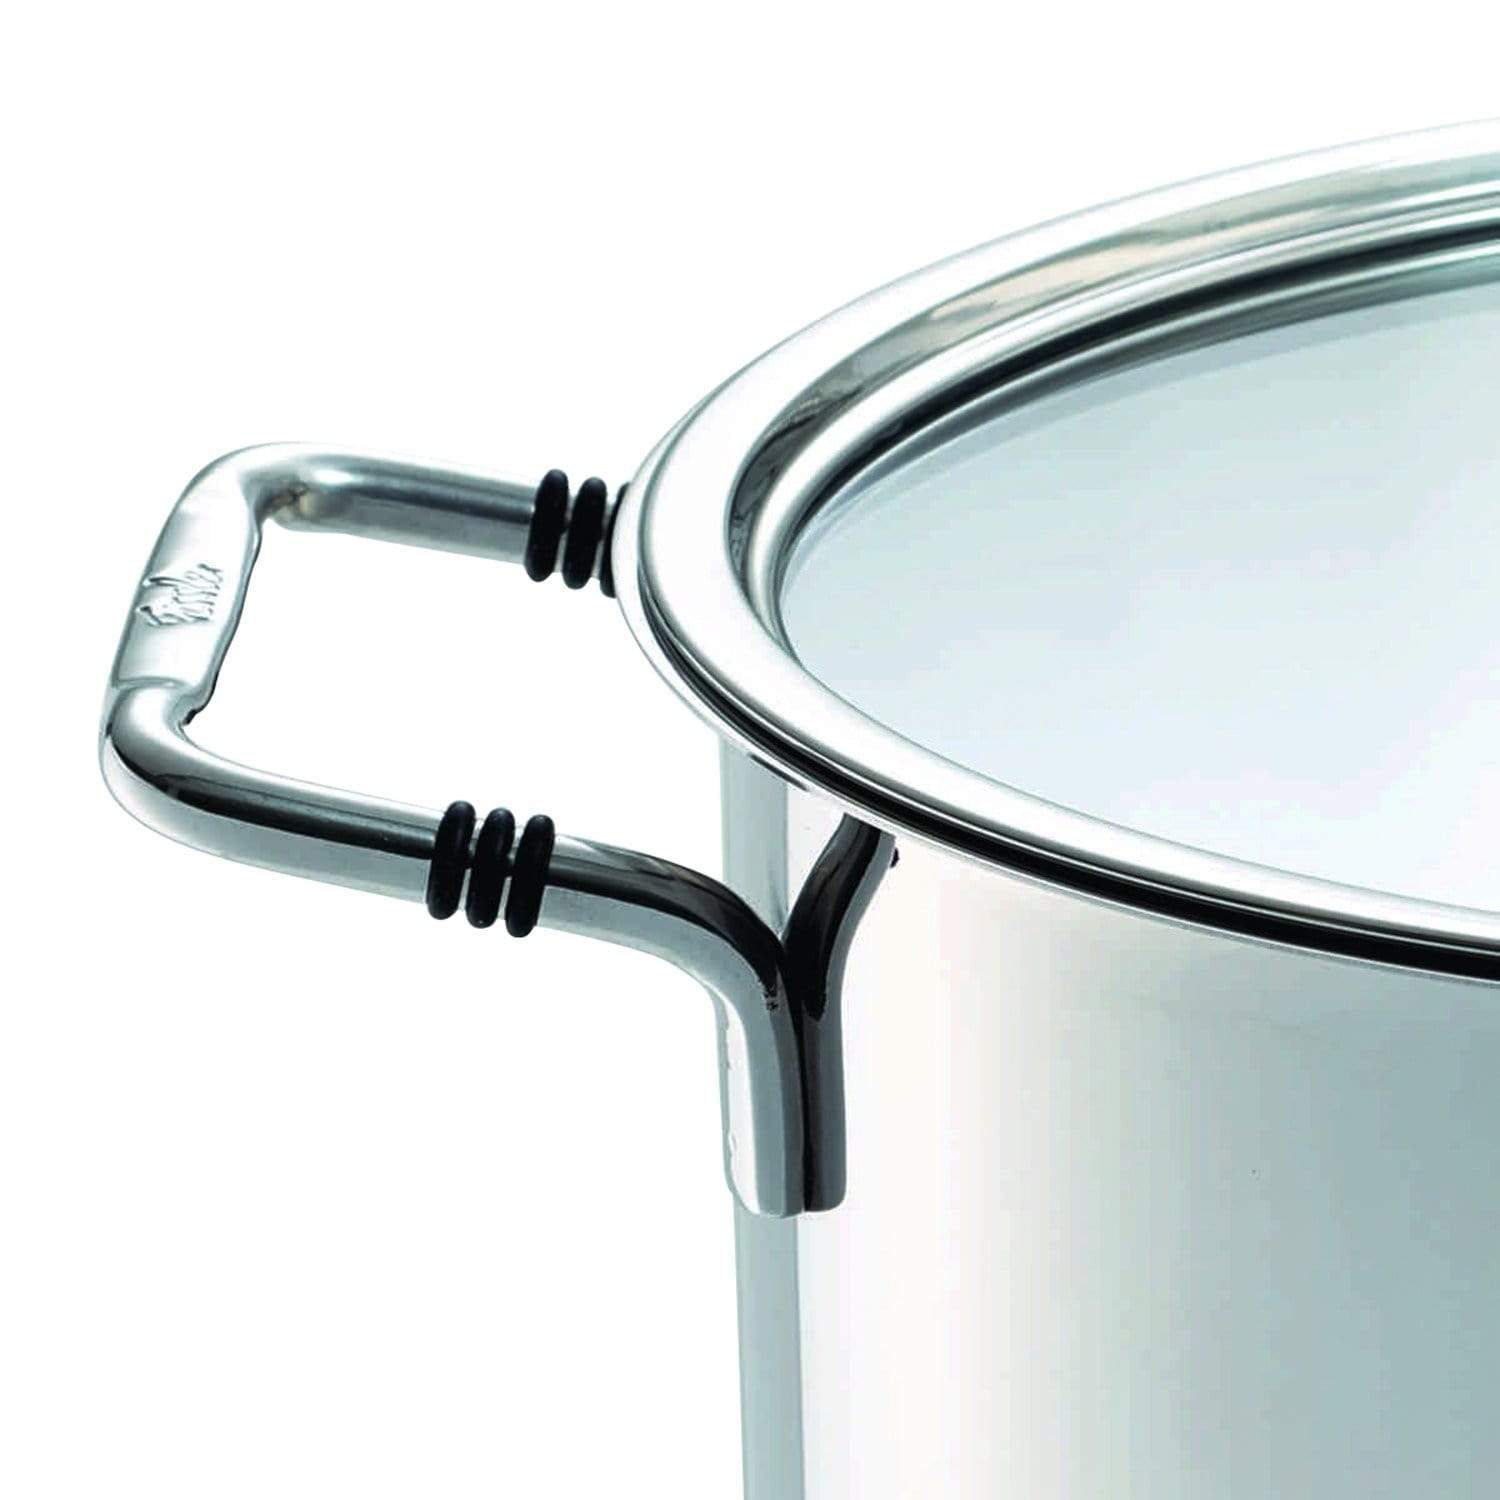 Fissler Bonn Stainless Steel Stew Pot - 24 cm - 086-112-24-000/0 - Jashanmal Home